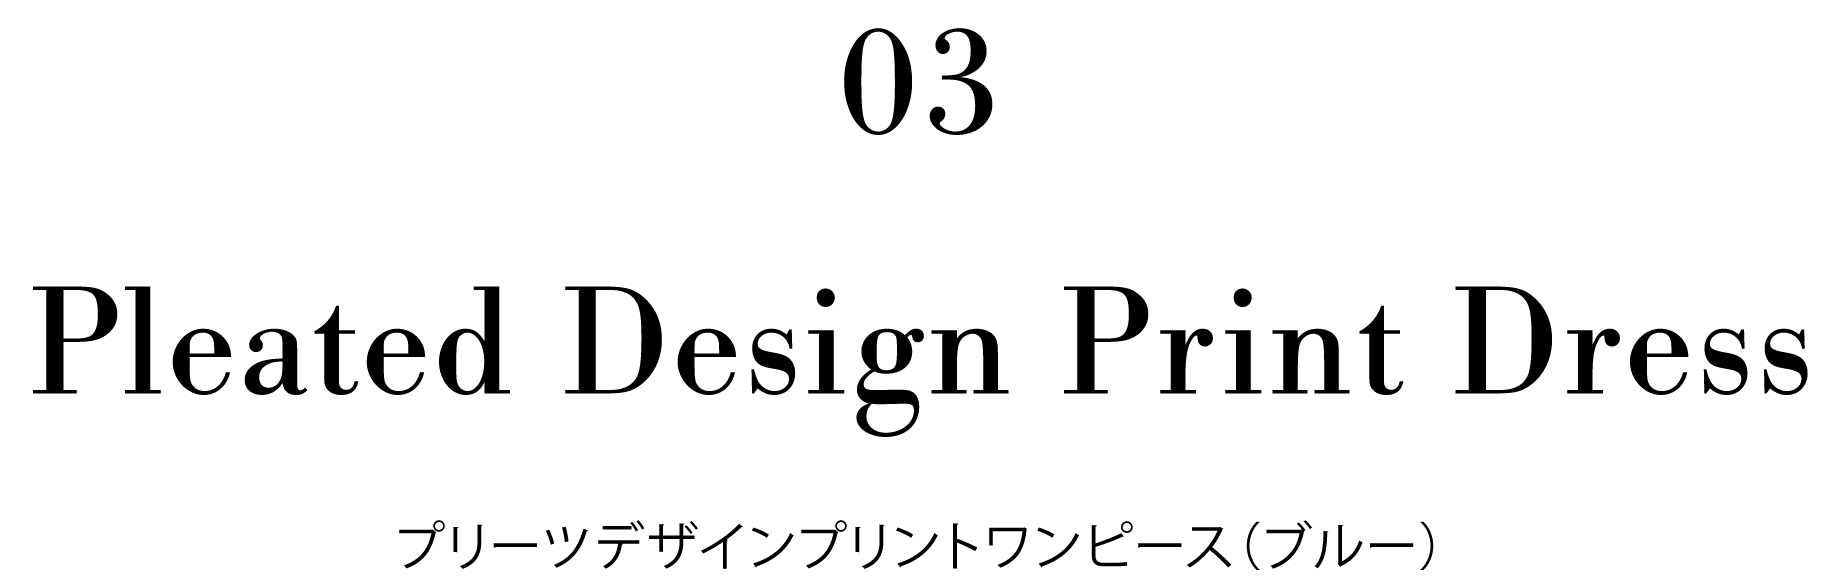 03 Pleated Design Print Dress